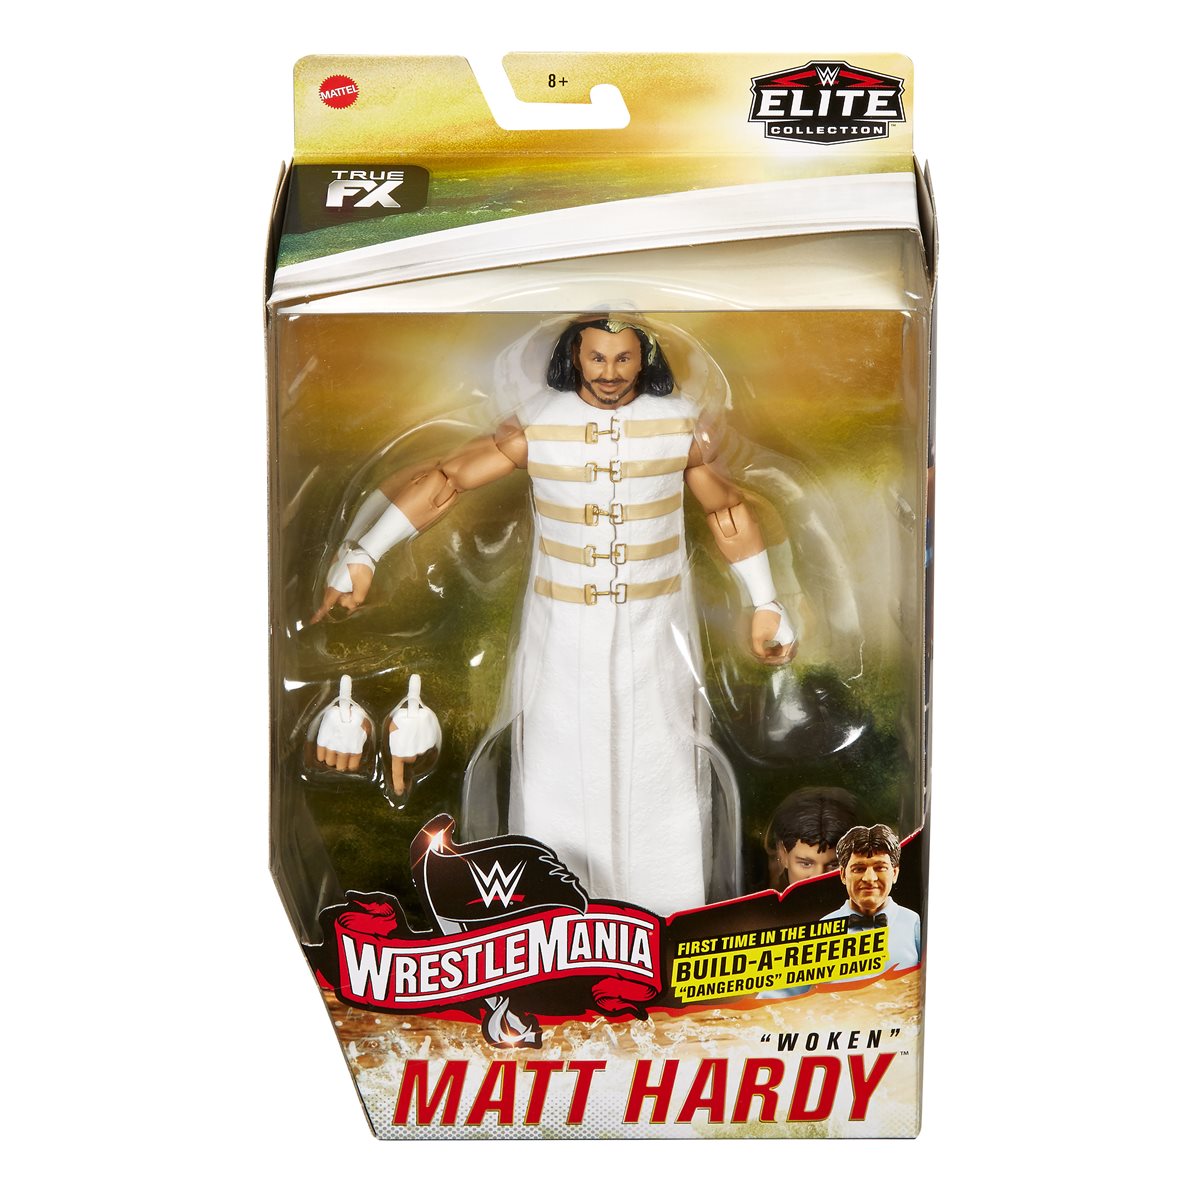 "Woken" Matt Hardy Build-A-Referee Mattel Wwe Wrestlemania Elite Action Figure 